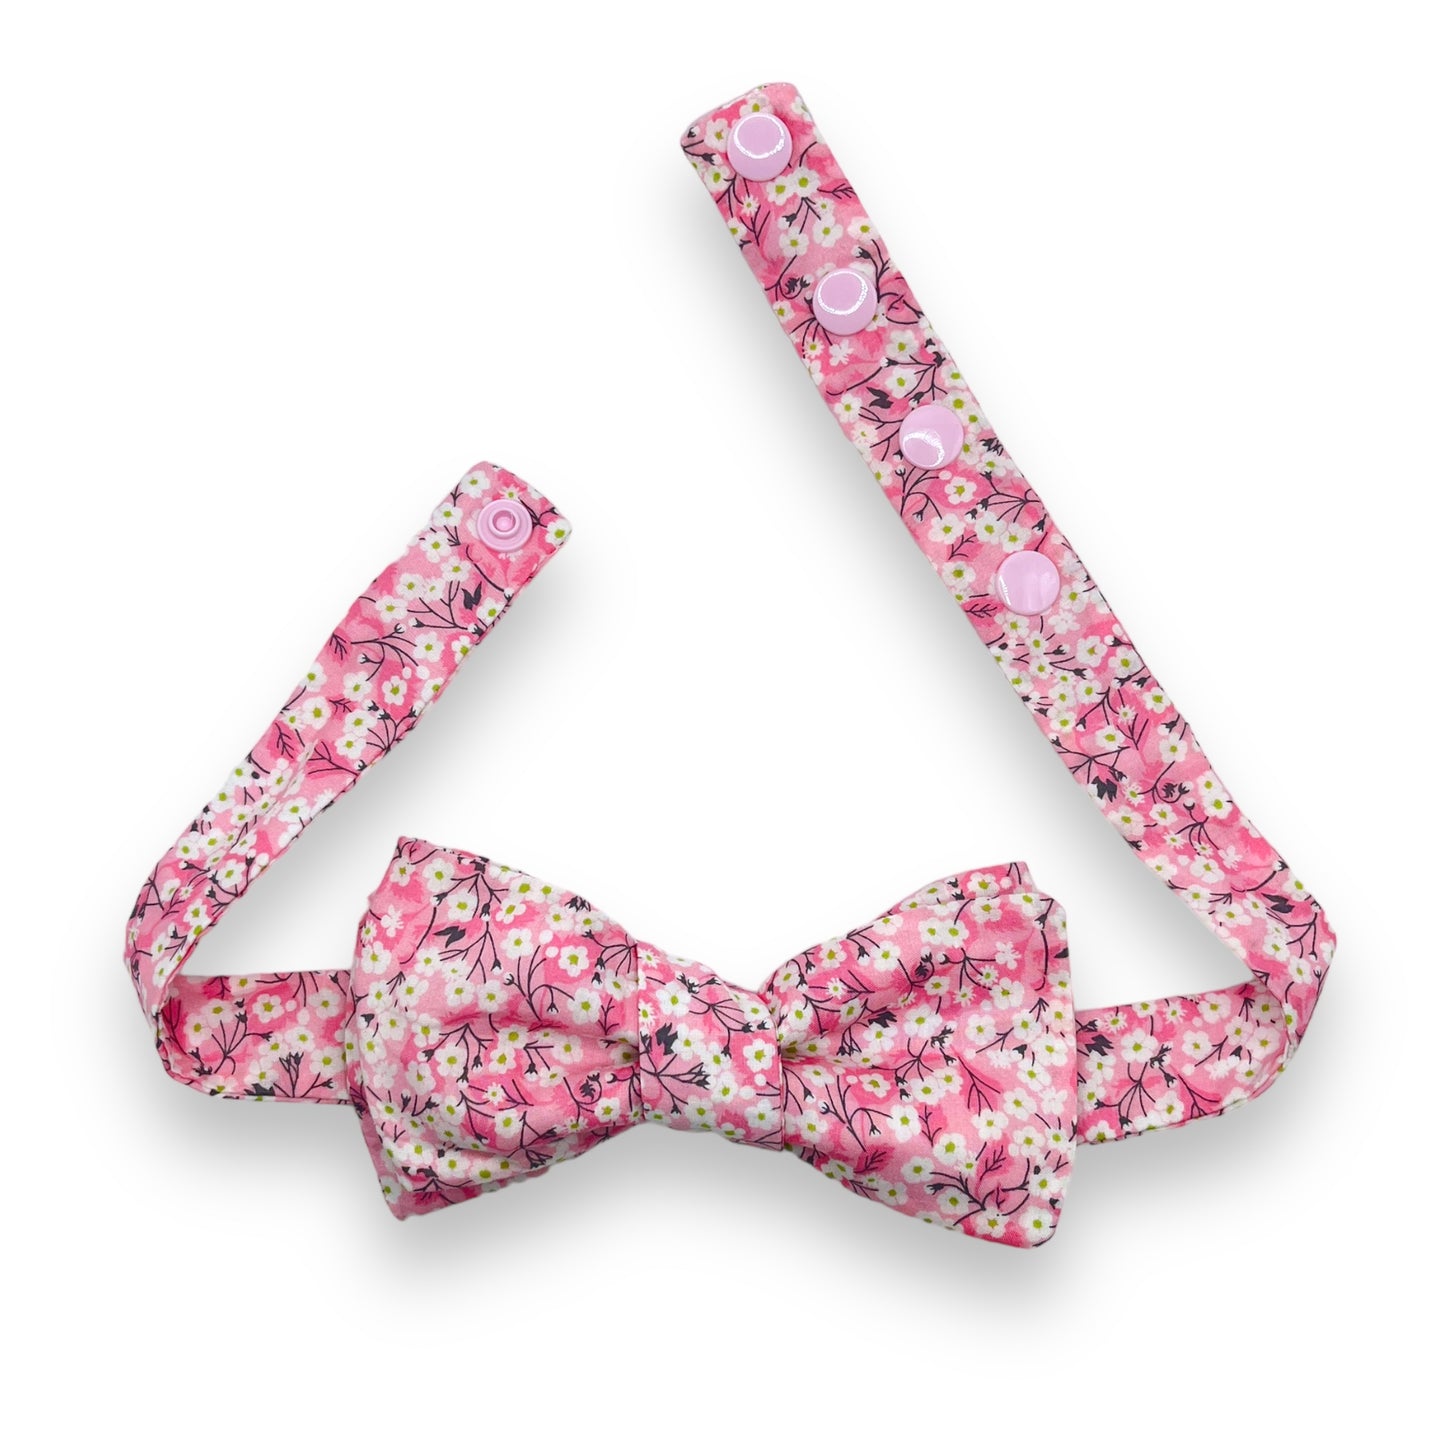 Bow Tie - Liberty Mitsi Pink